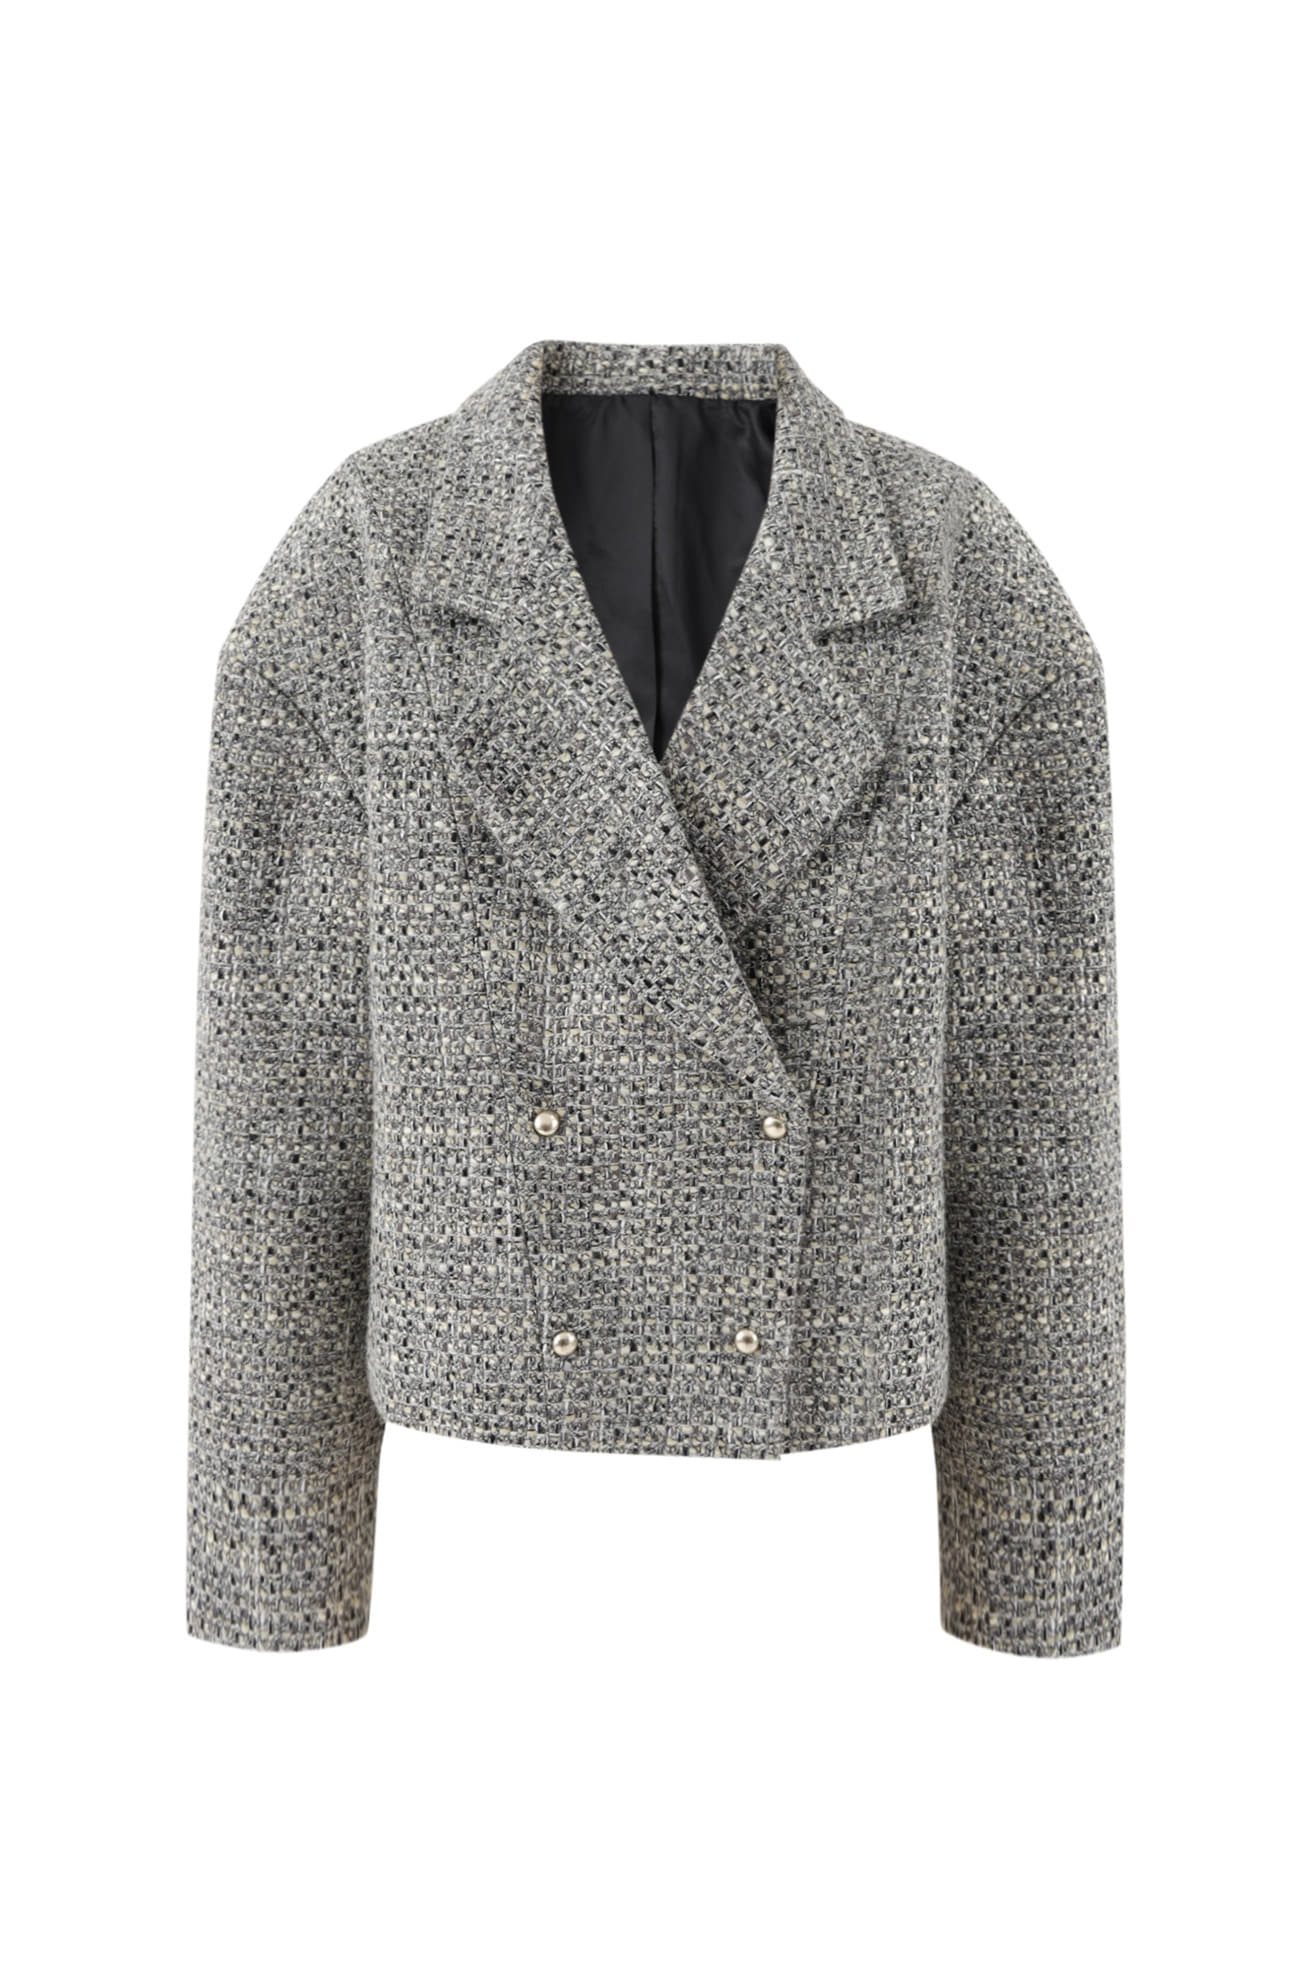 Abraham Chanel Tweed Jacket (GRAY)